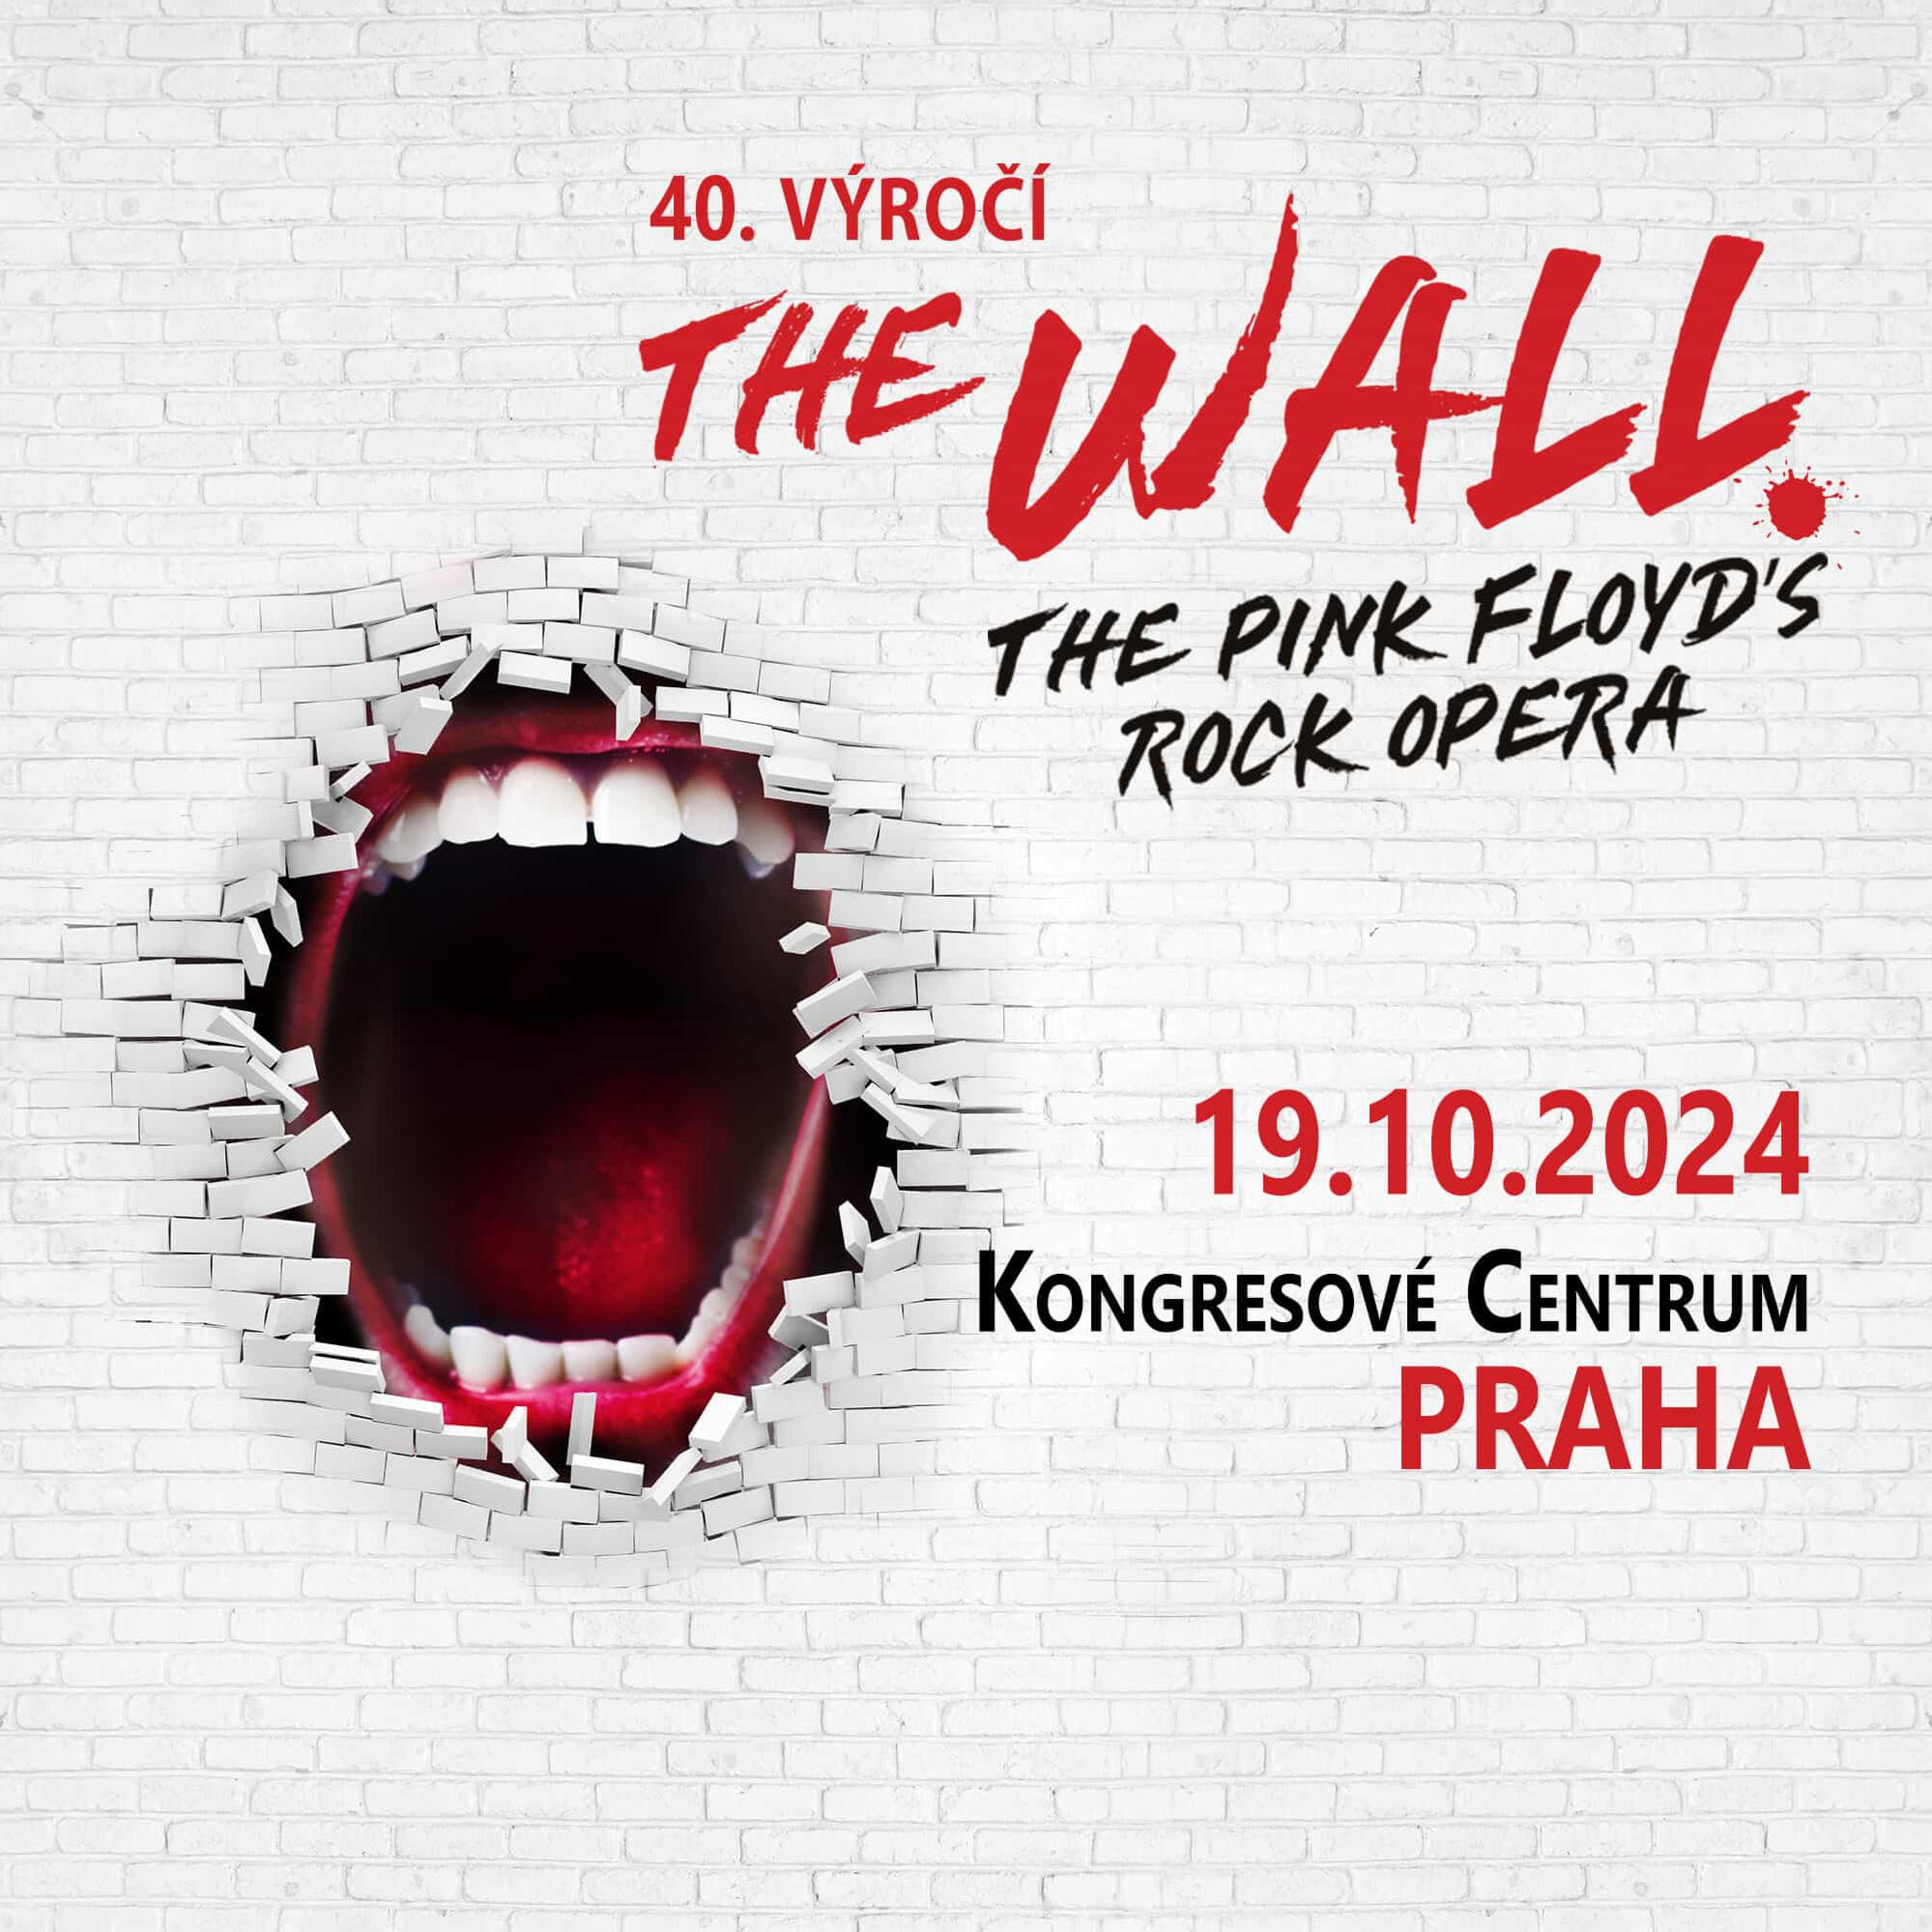 the wall rocková opera pink floyd praha 40 výročí